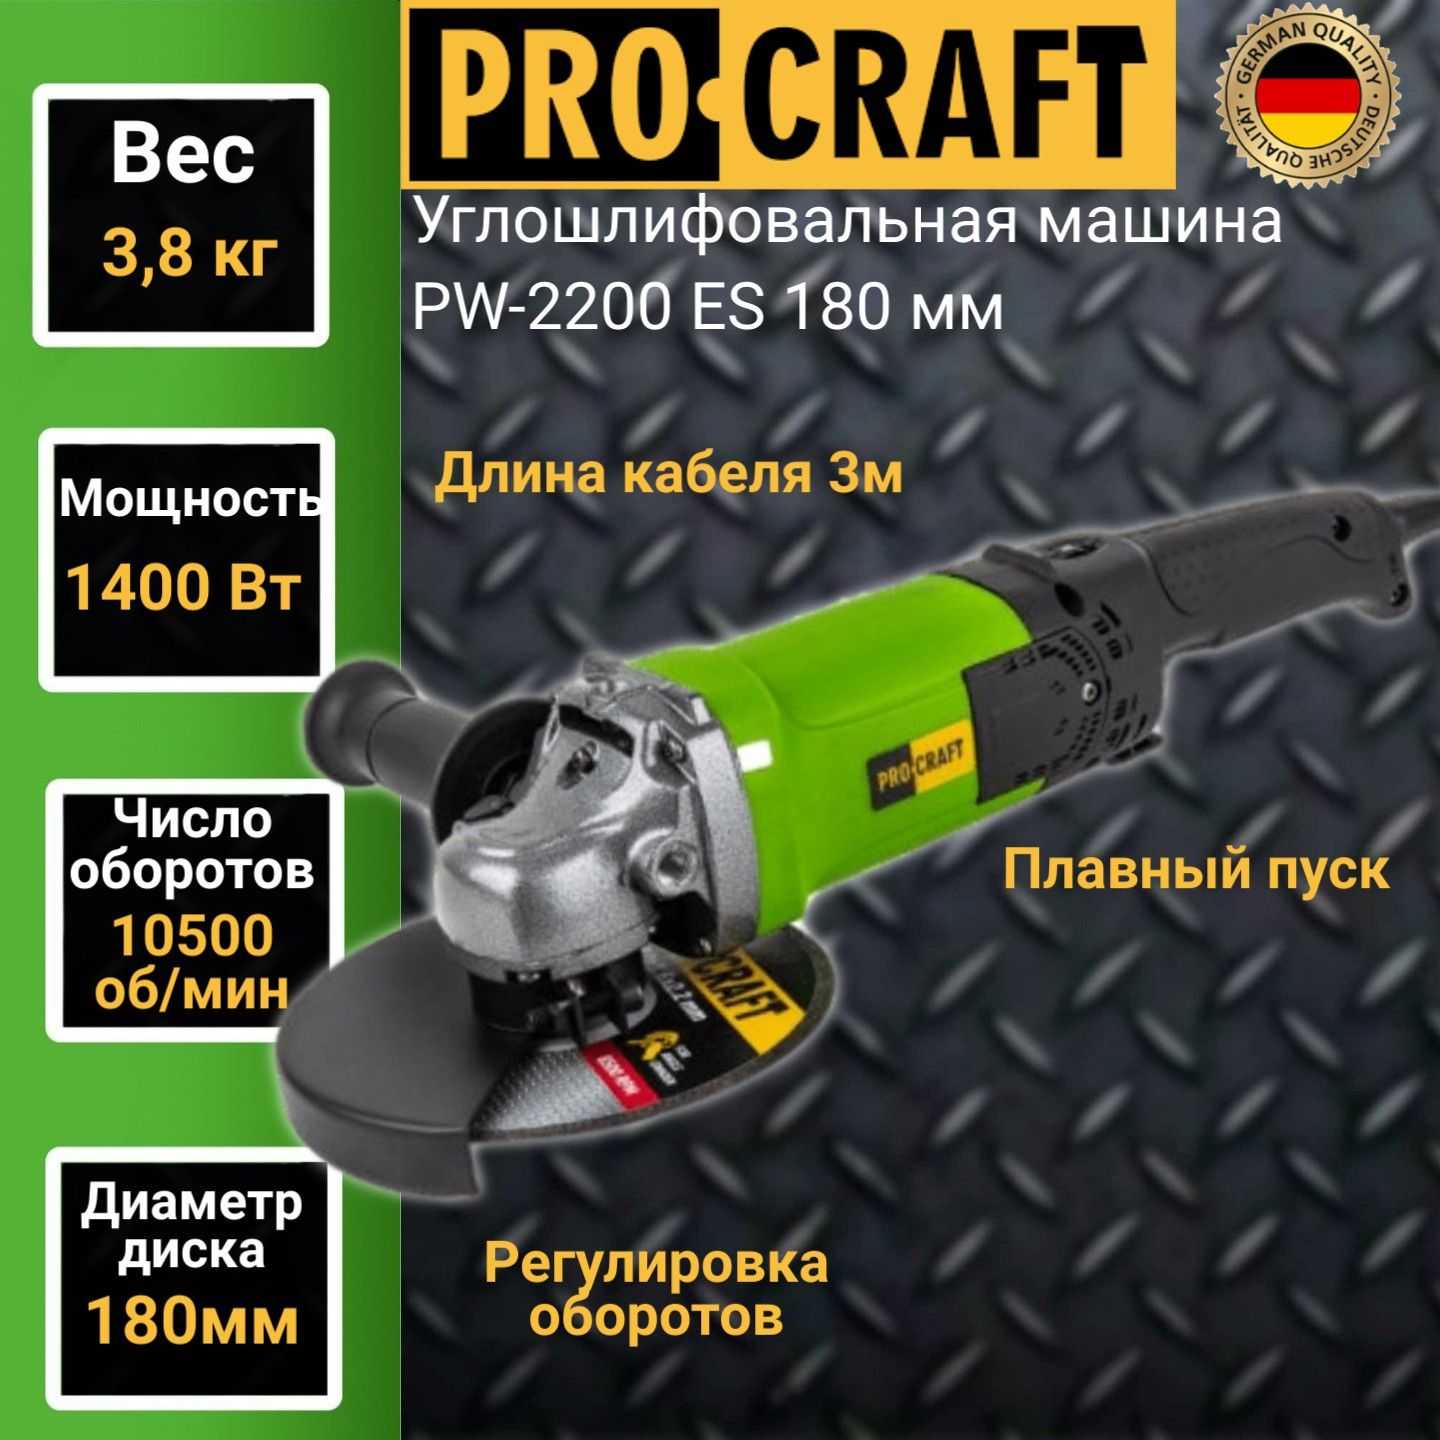 Углошлифовальная машина болгарка Procraft PW-2200ЕS, 180мм круг, 1400Вт, 10500об/мин машина углошлифовальная ушм patriot